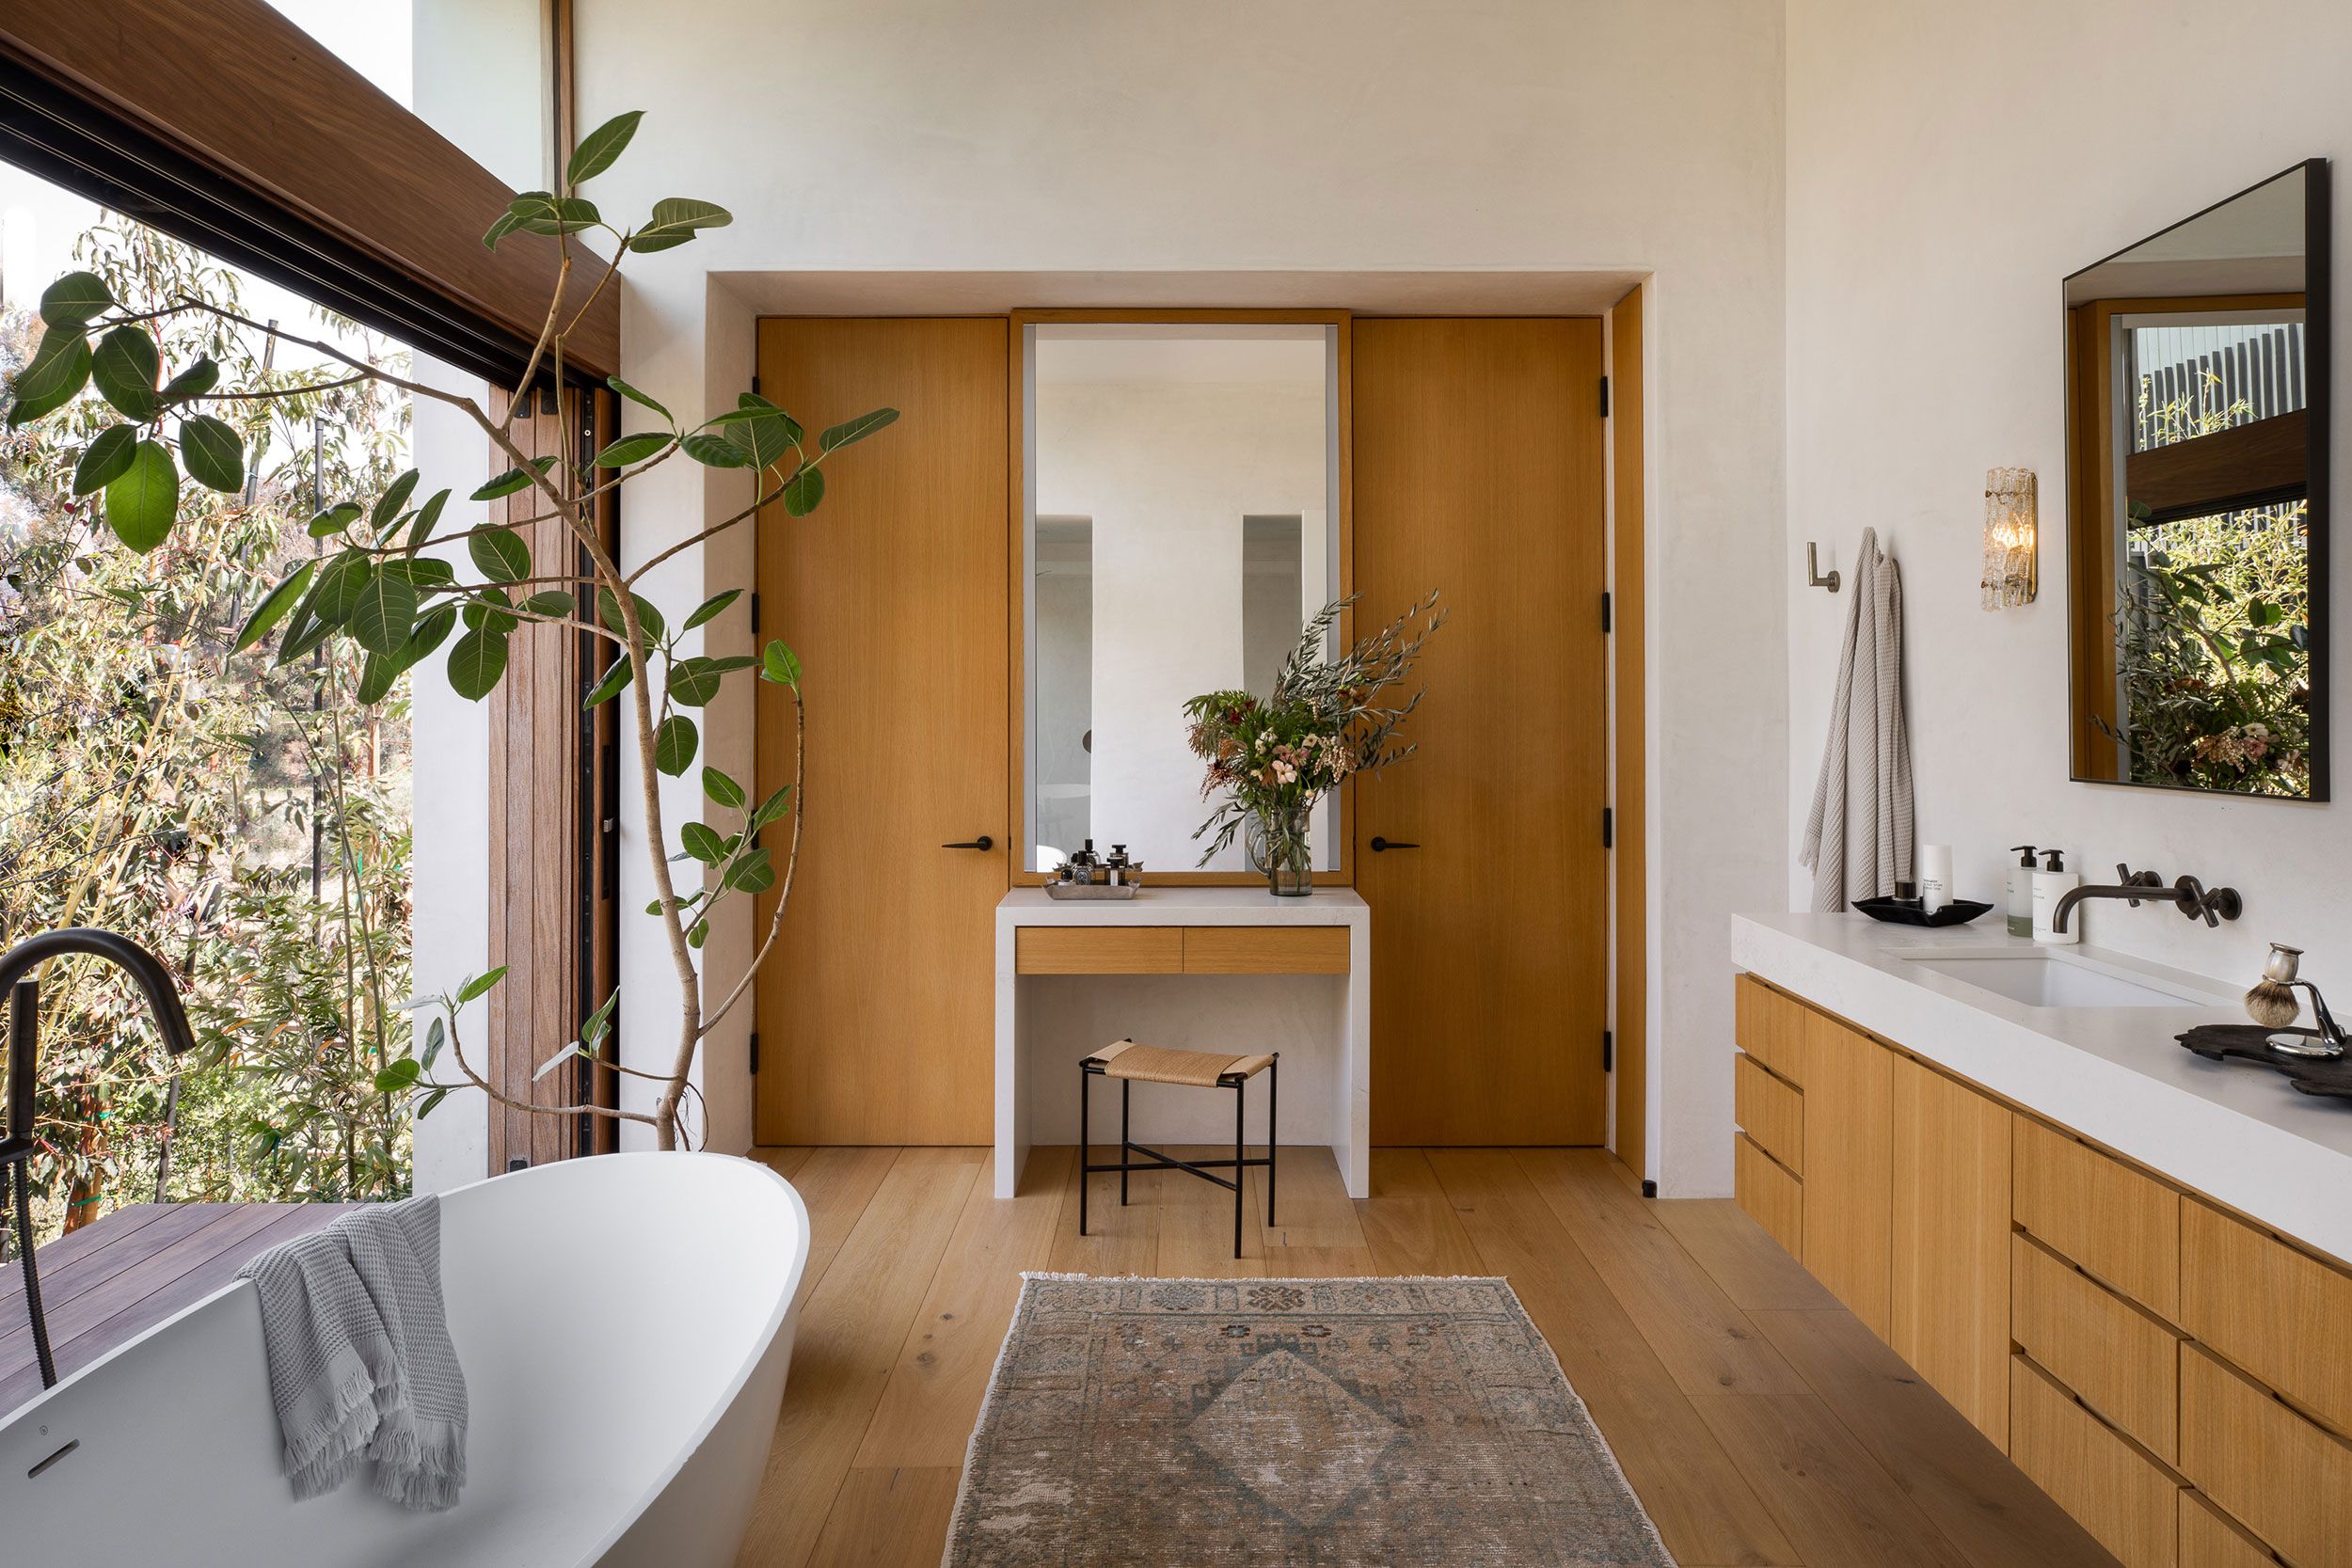 50 modern bathroom ideas - best bathroom ideas with modern design